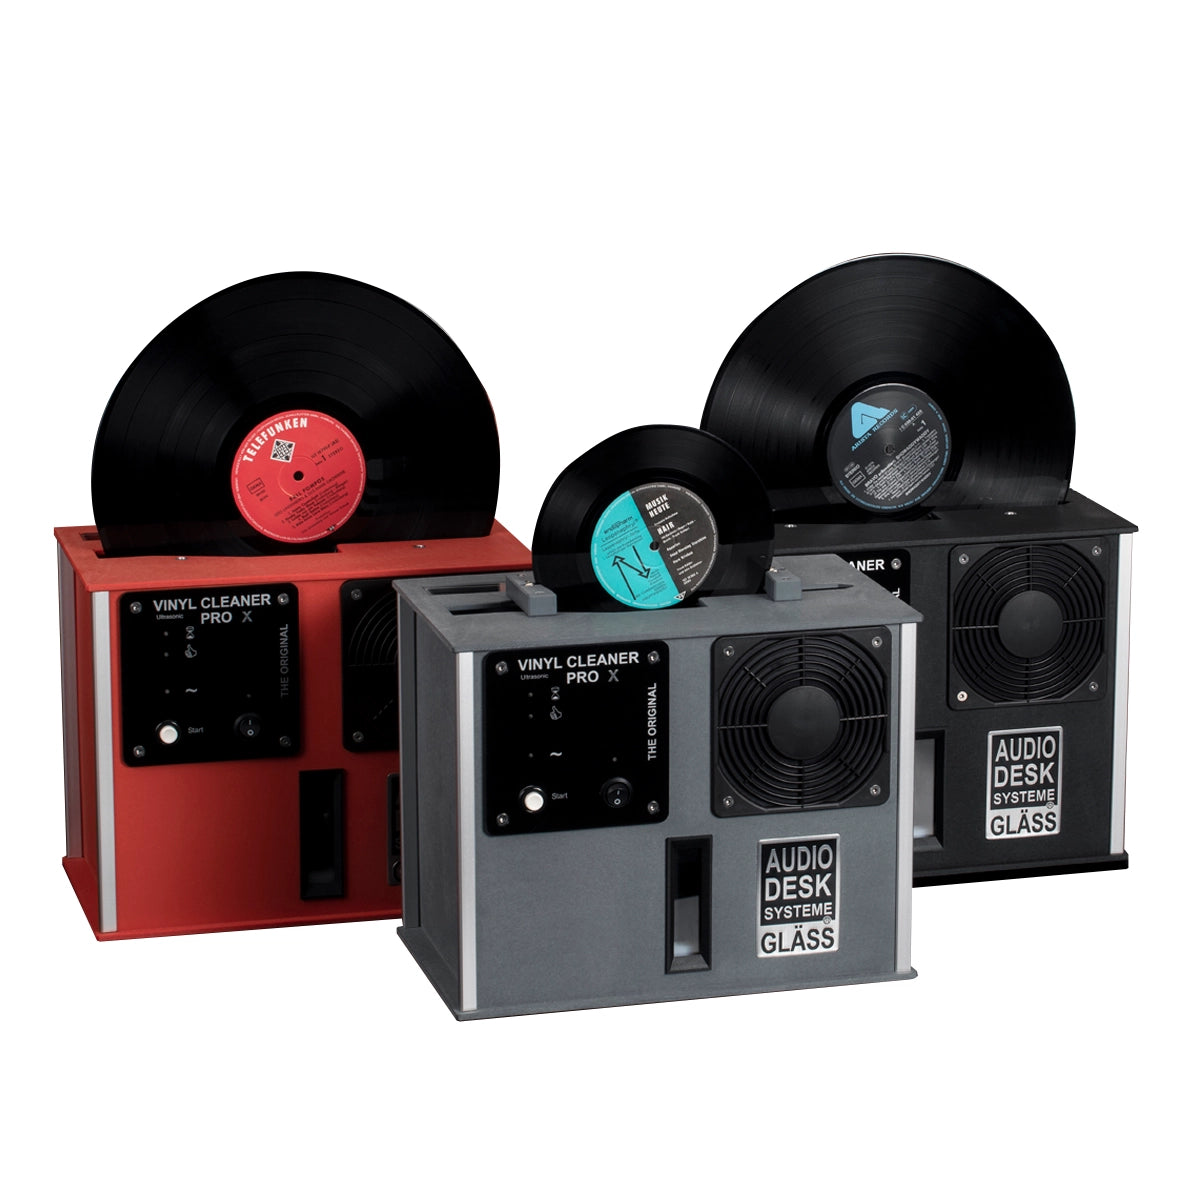 Audio Desk Systeme Gläss Ultrasonic Vinyl Cleaner PRO X